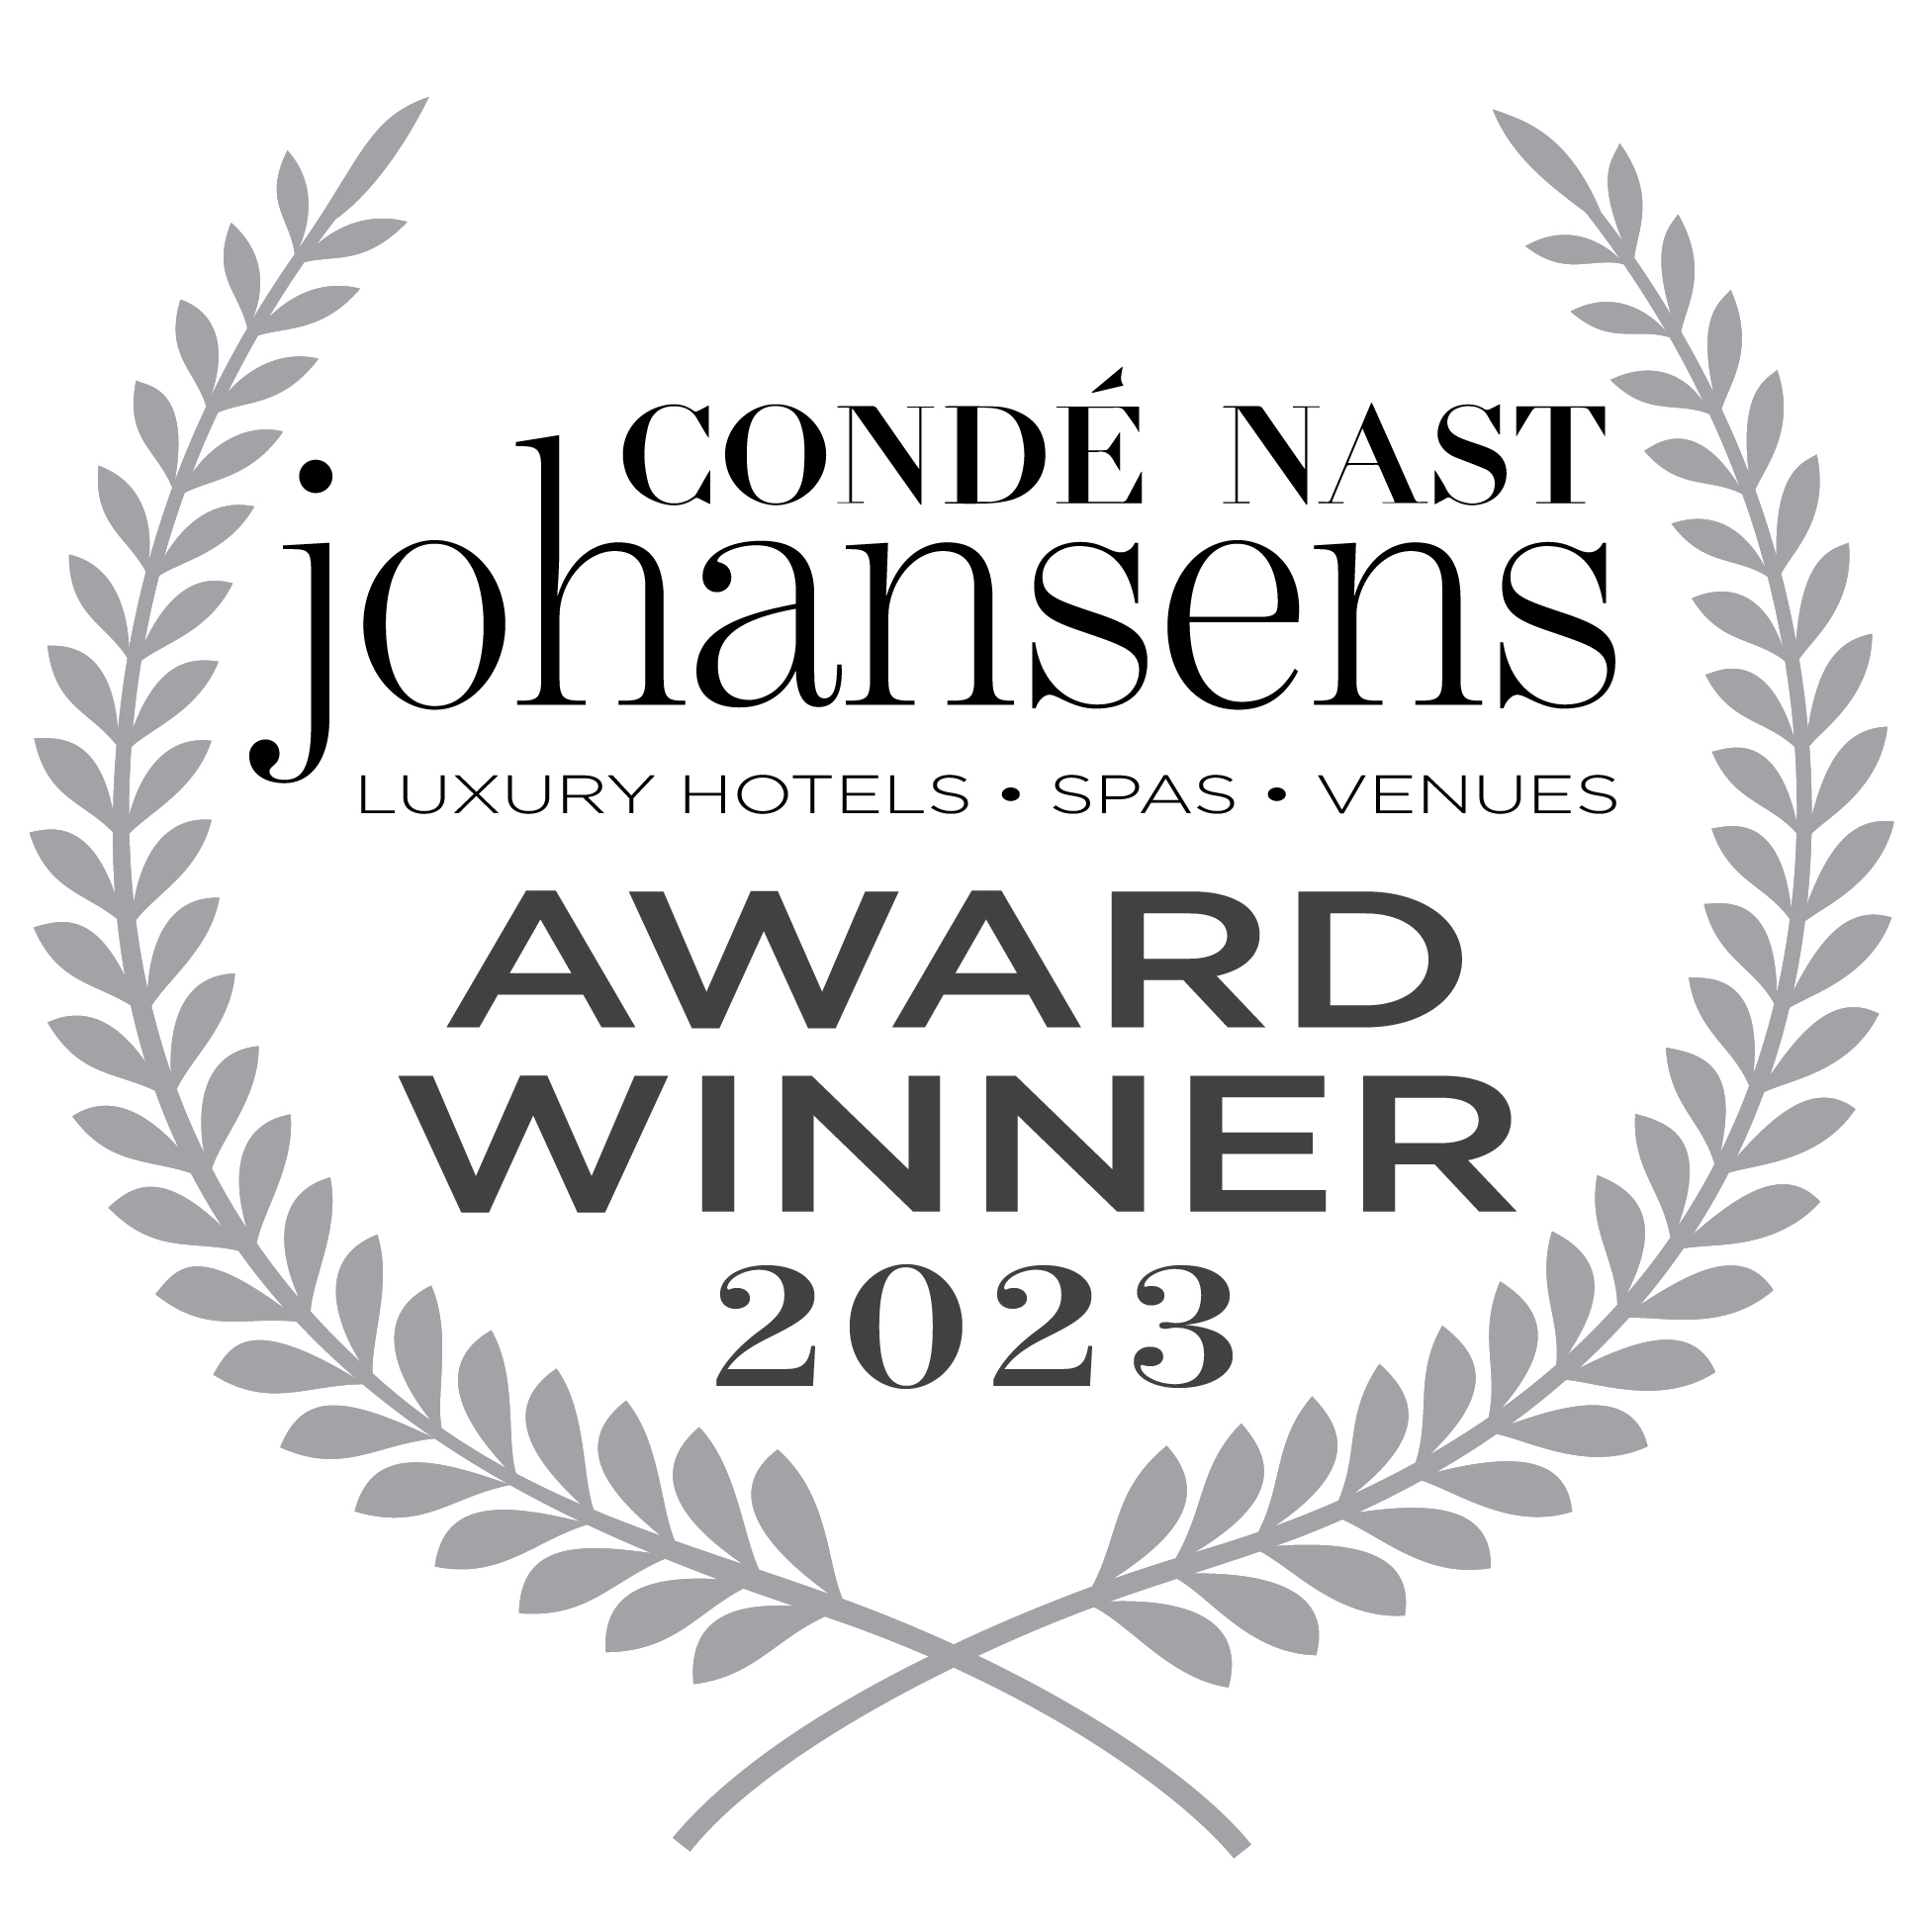 Condé Nast Johansens: Awards for Excellence 2023